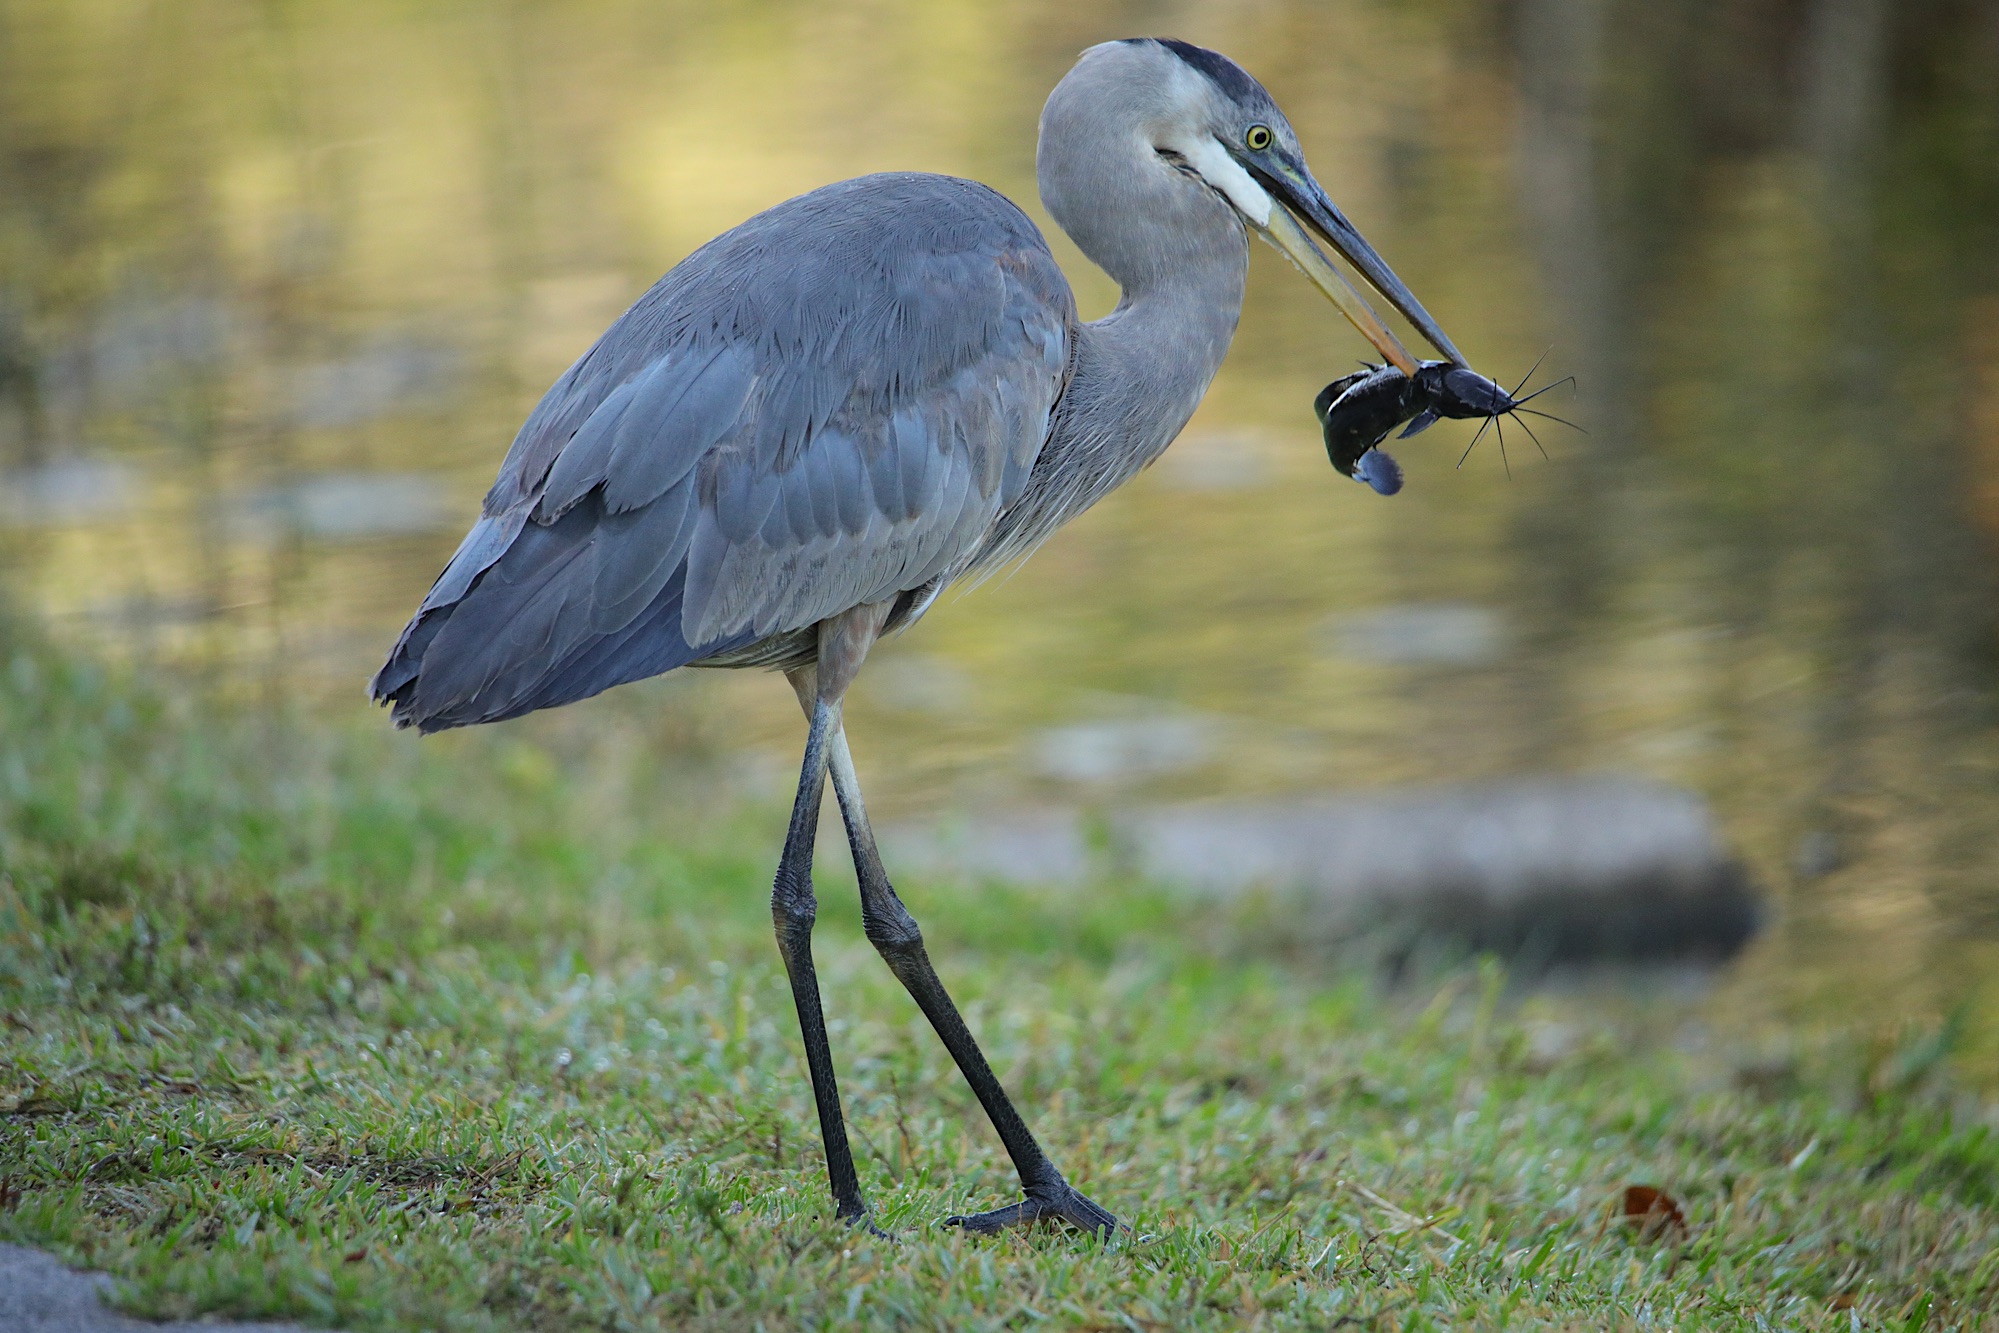 Florida birds photo tour